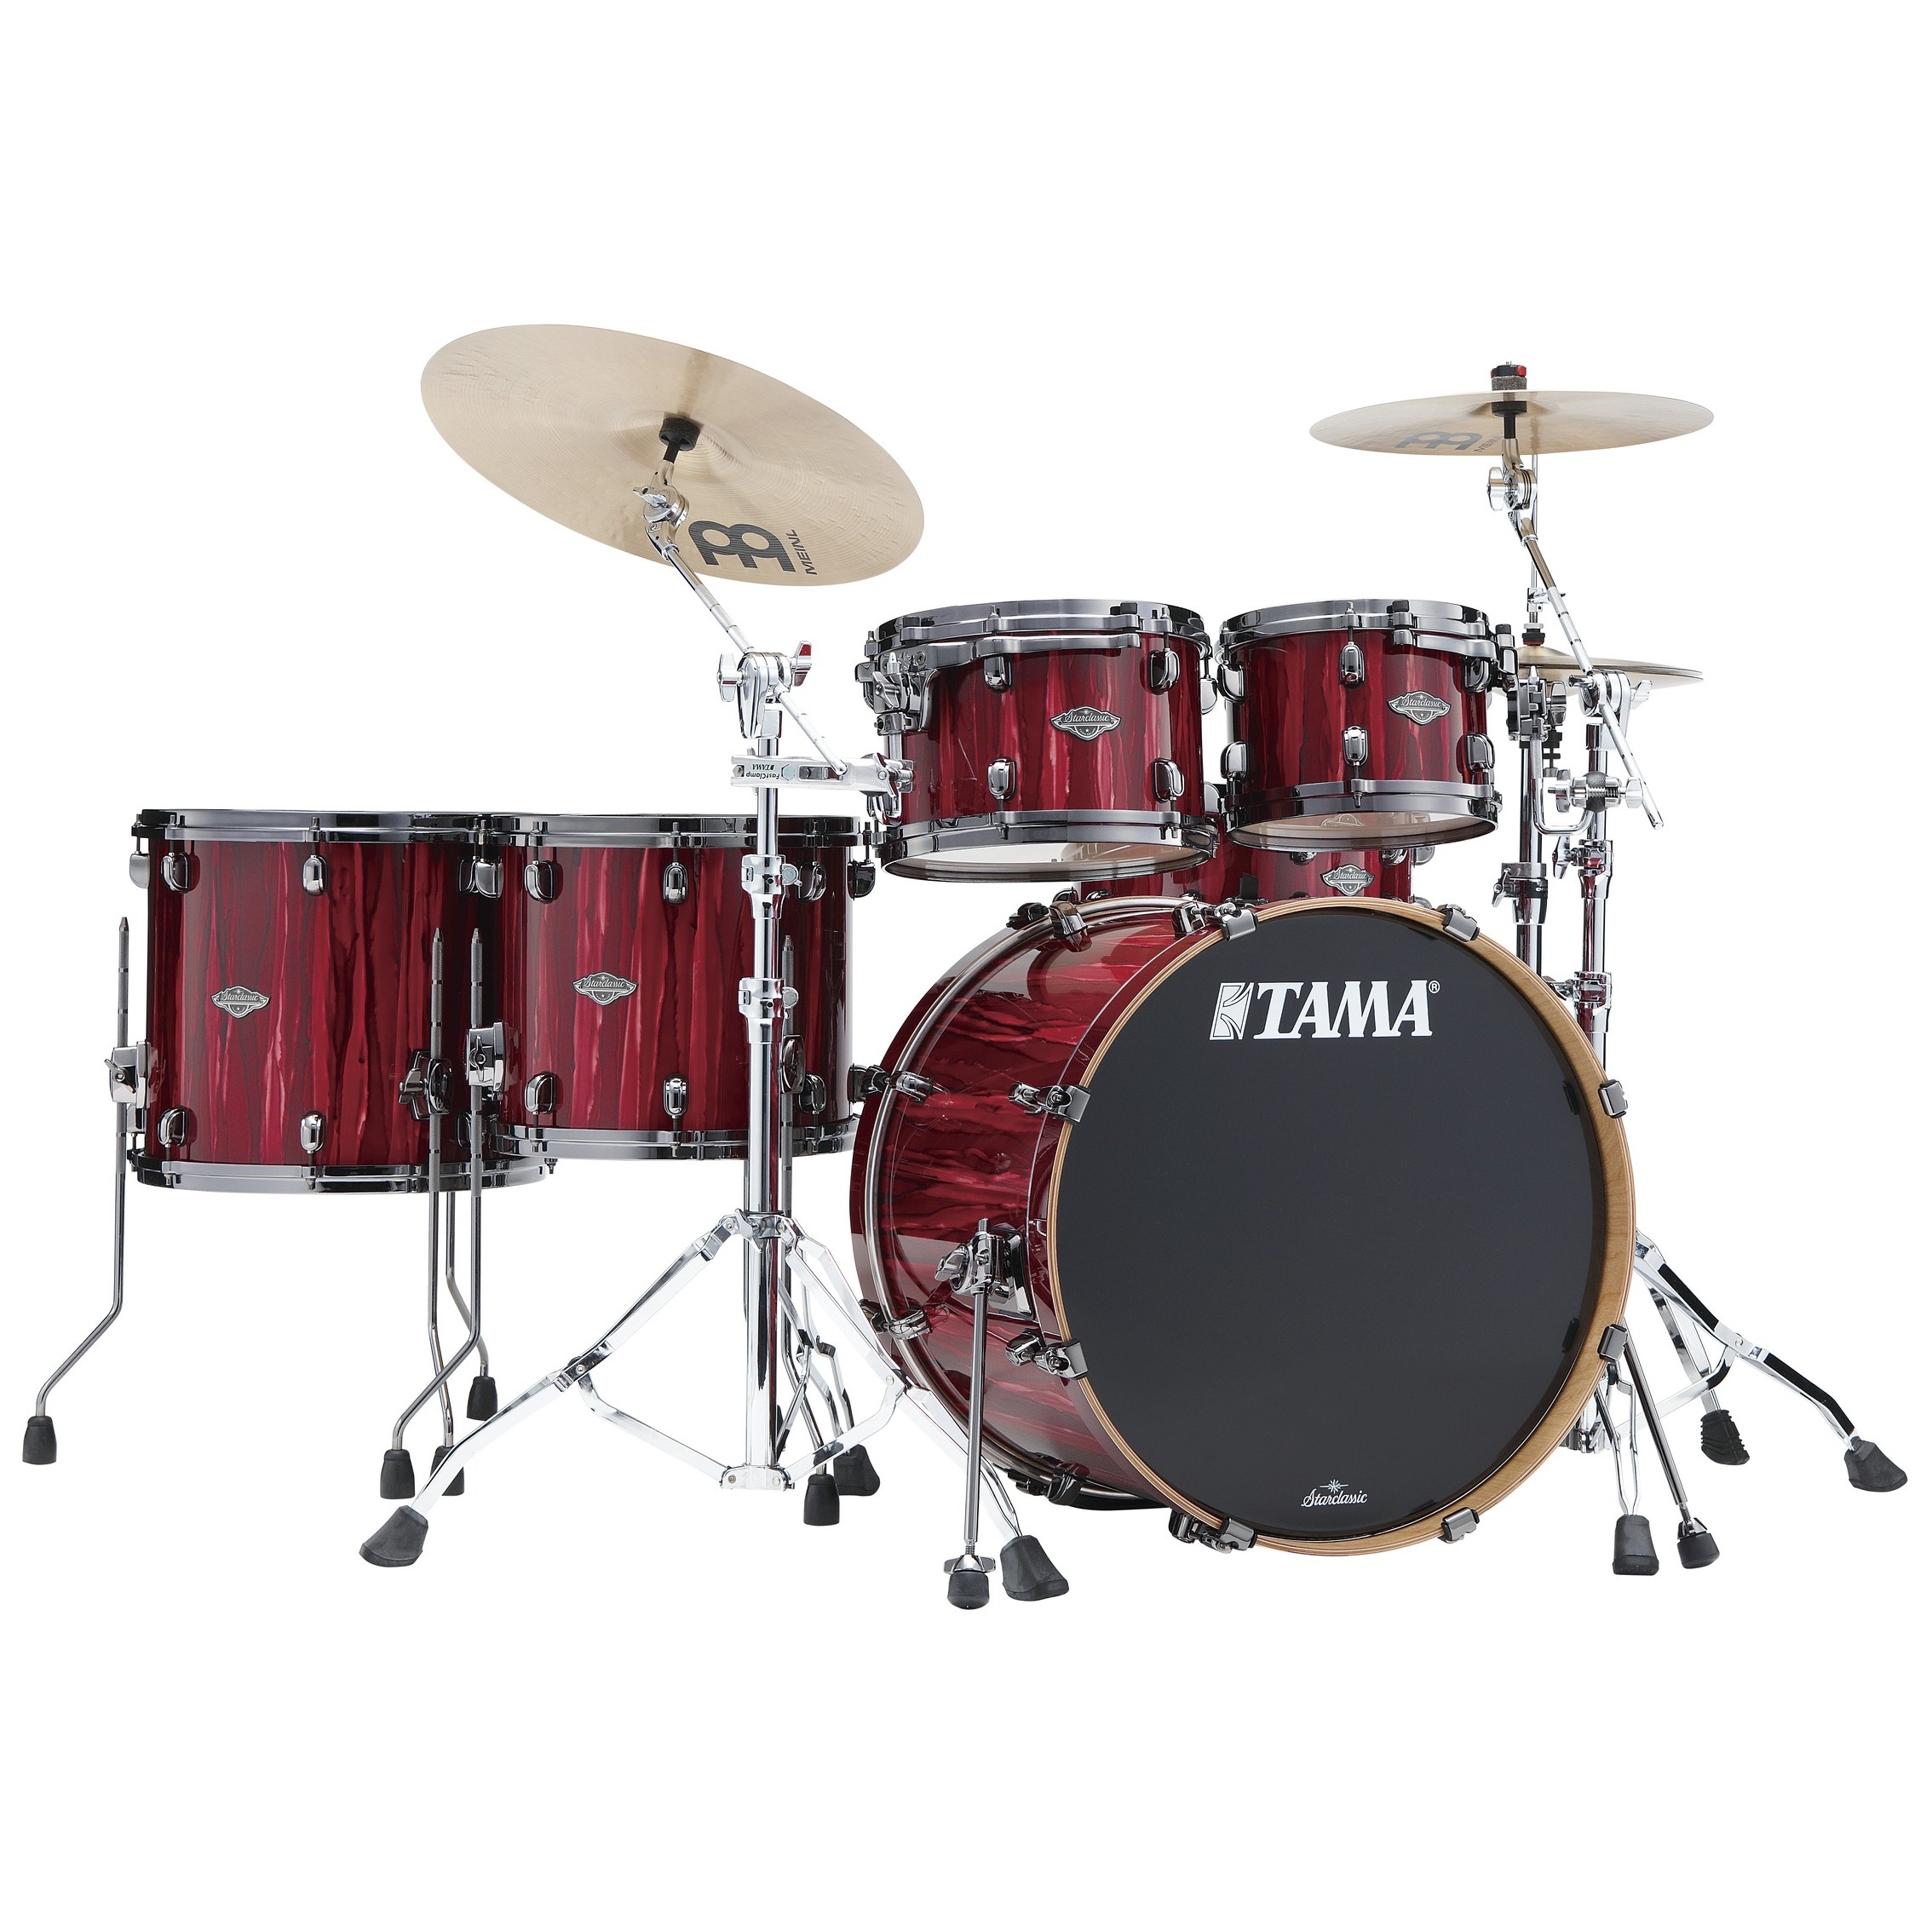 Tama MBS52RZBNSCRW Starclassic Performer Limited Drum Kit 5 teilig - Crimson Red Waterfall/Black Nickel